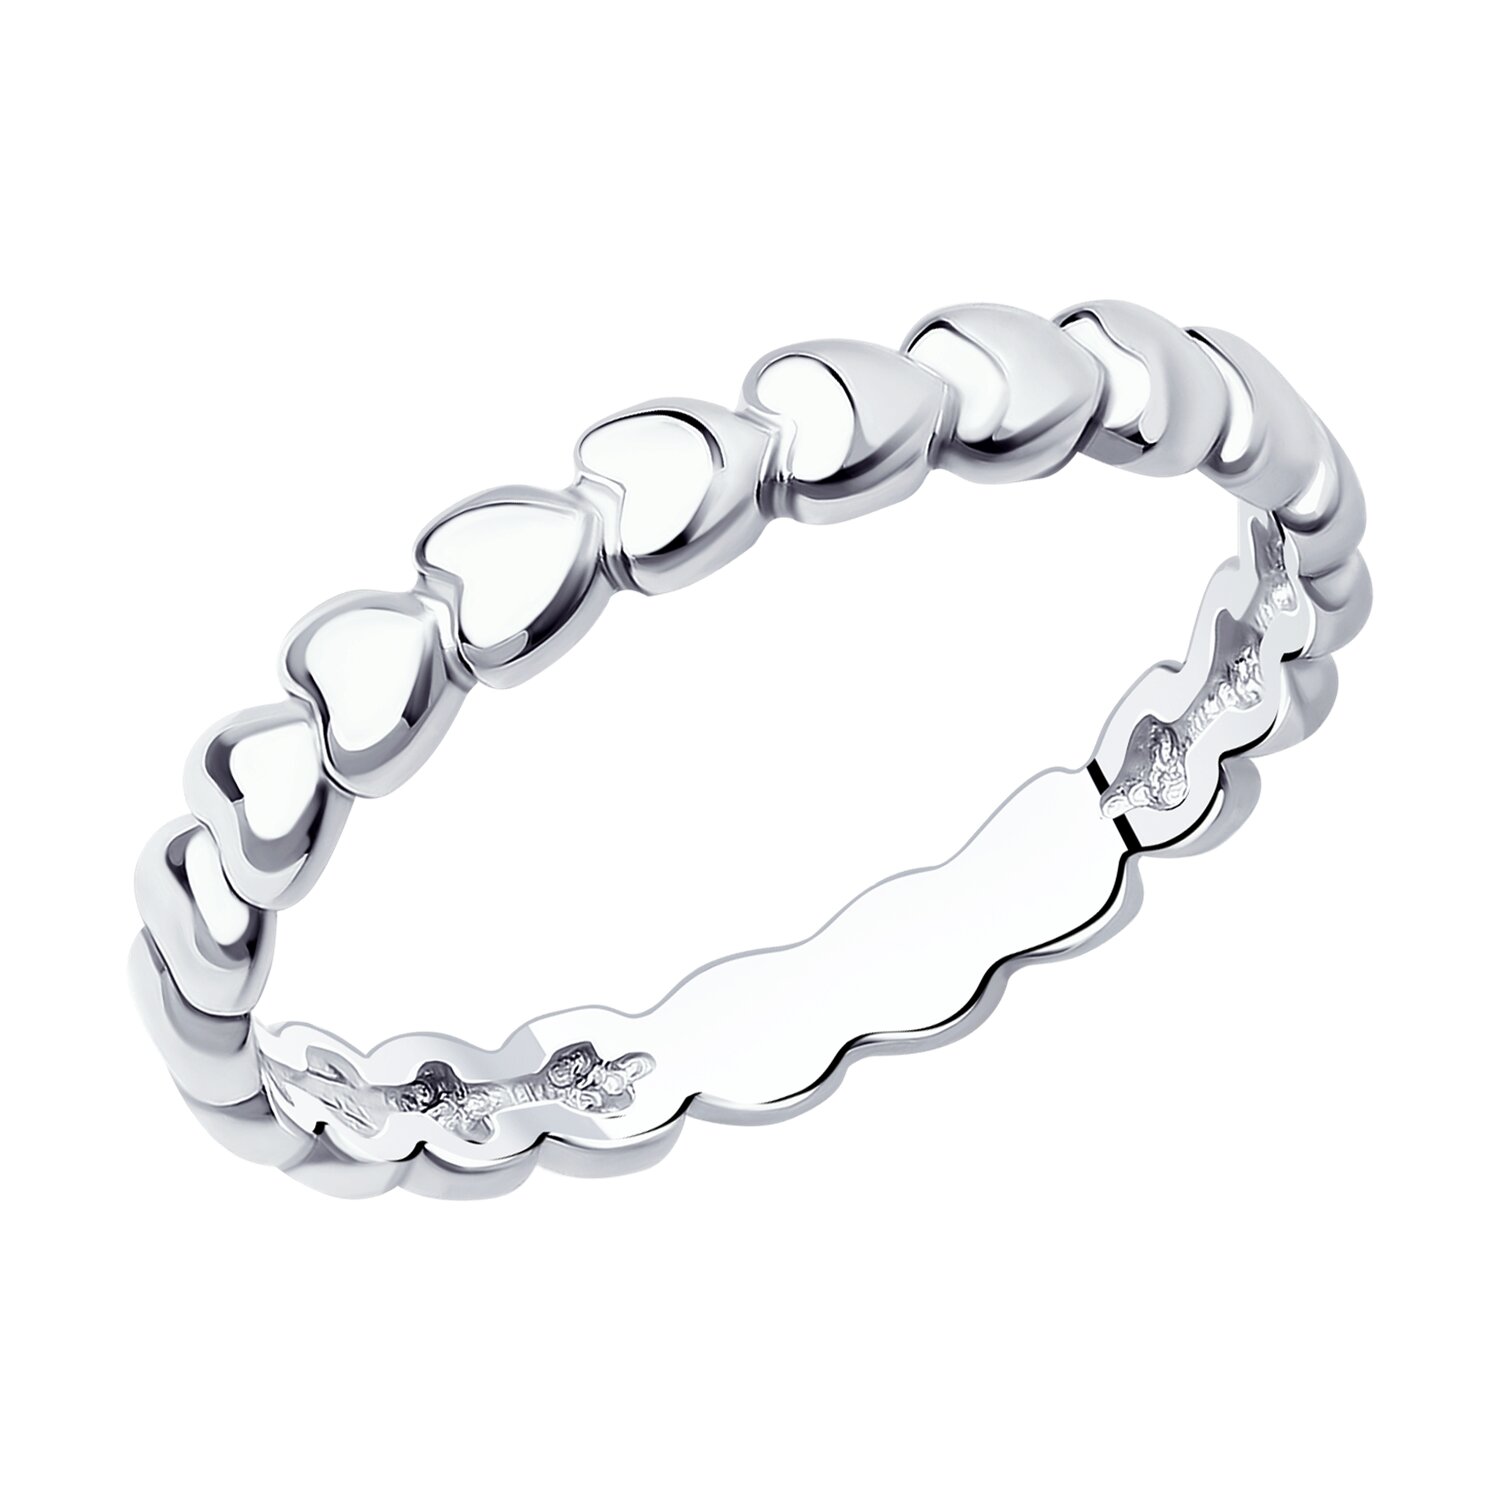 Sterling Silver Ring